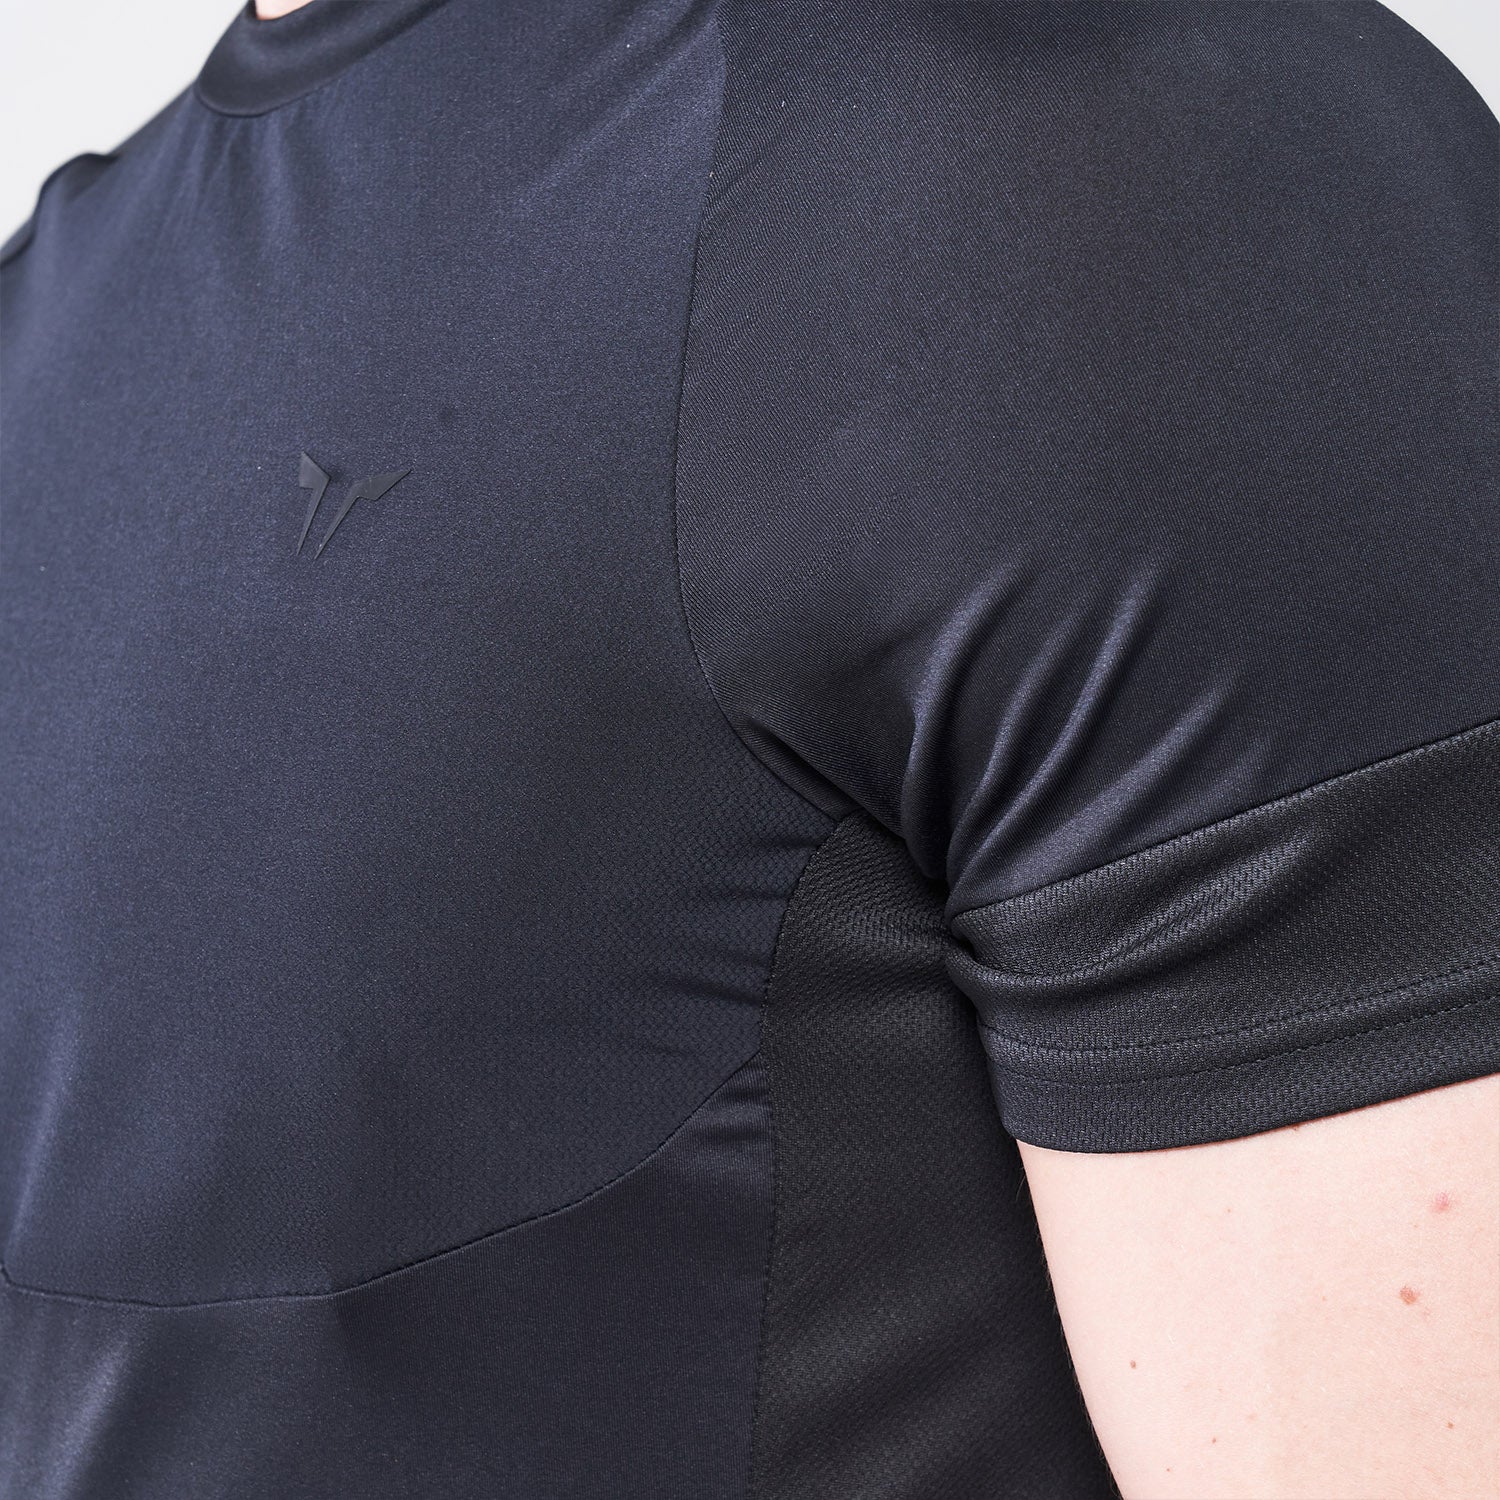 squatwolf-gym-wear-lab360-impact-tee-black-workout-shirts-for-men